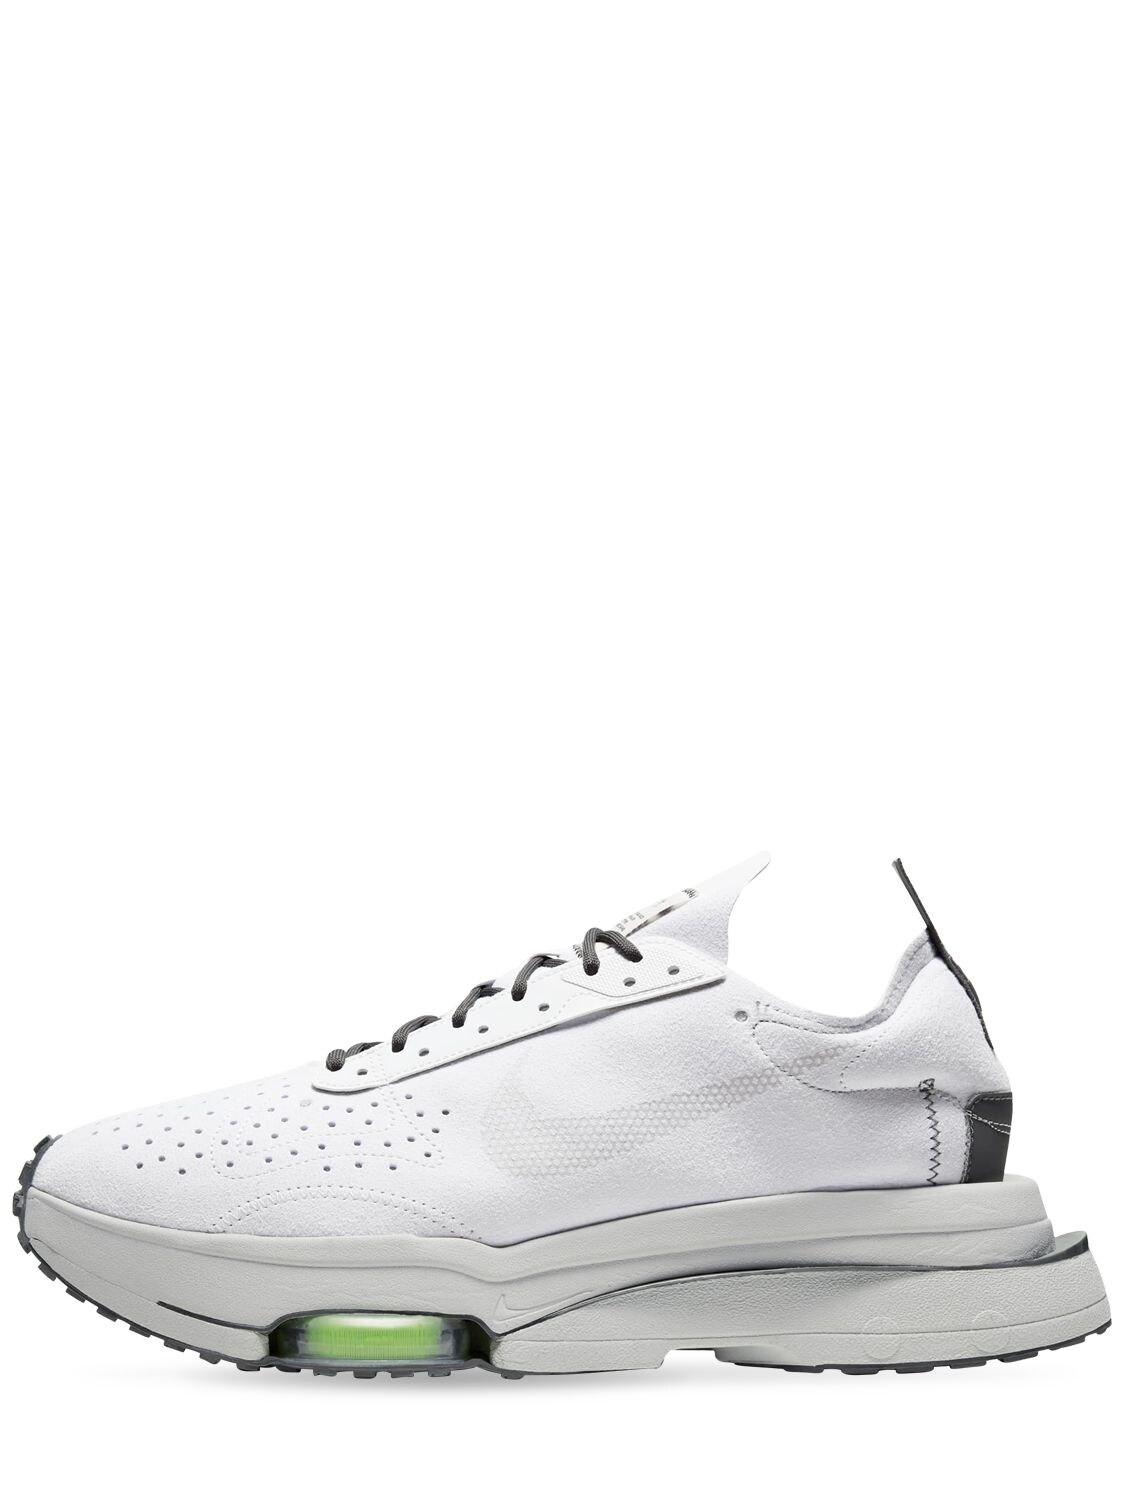 Nike Air Zoom Type Sneakers In White